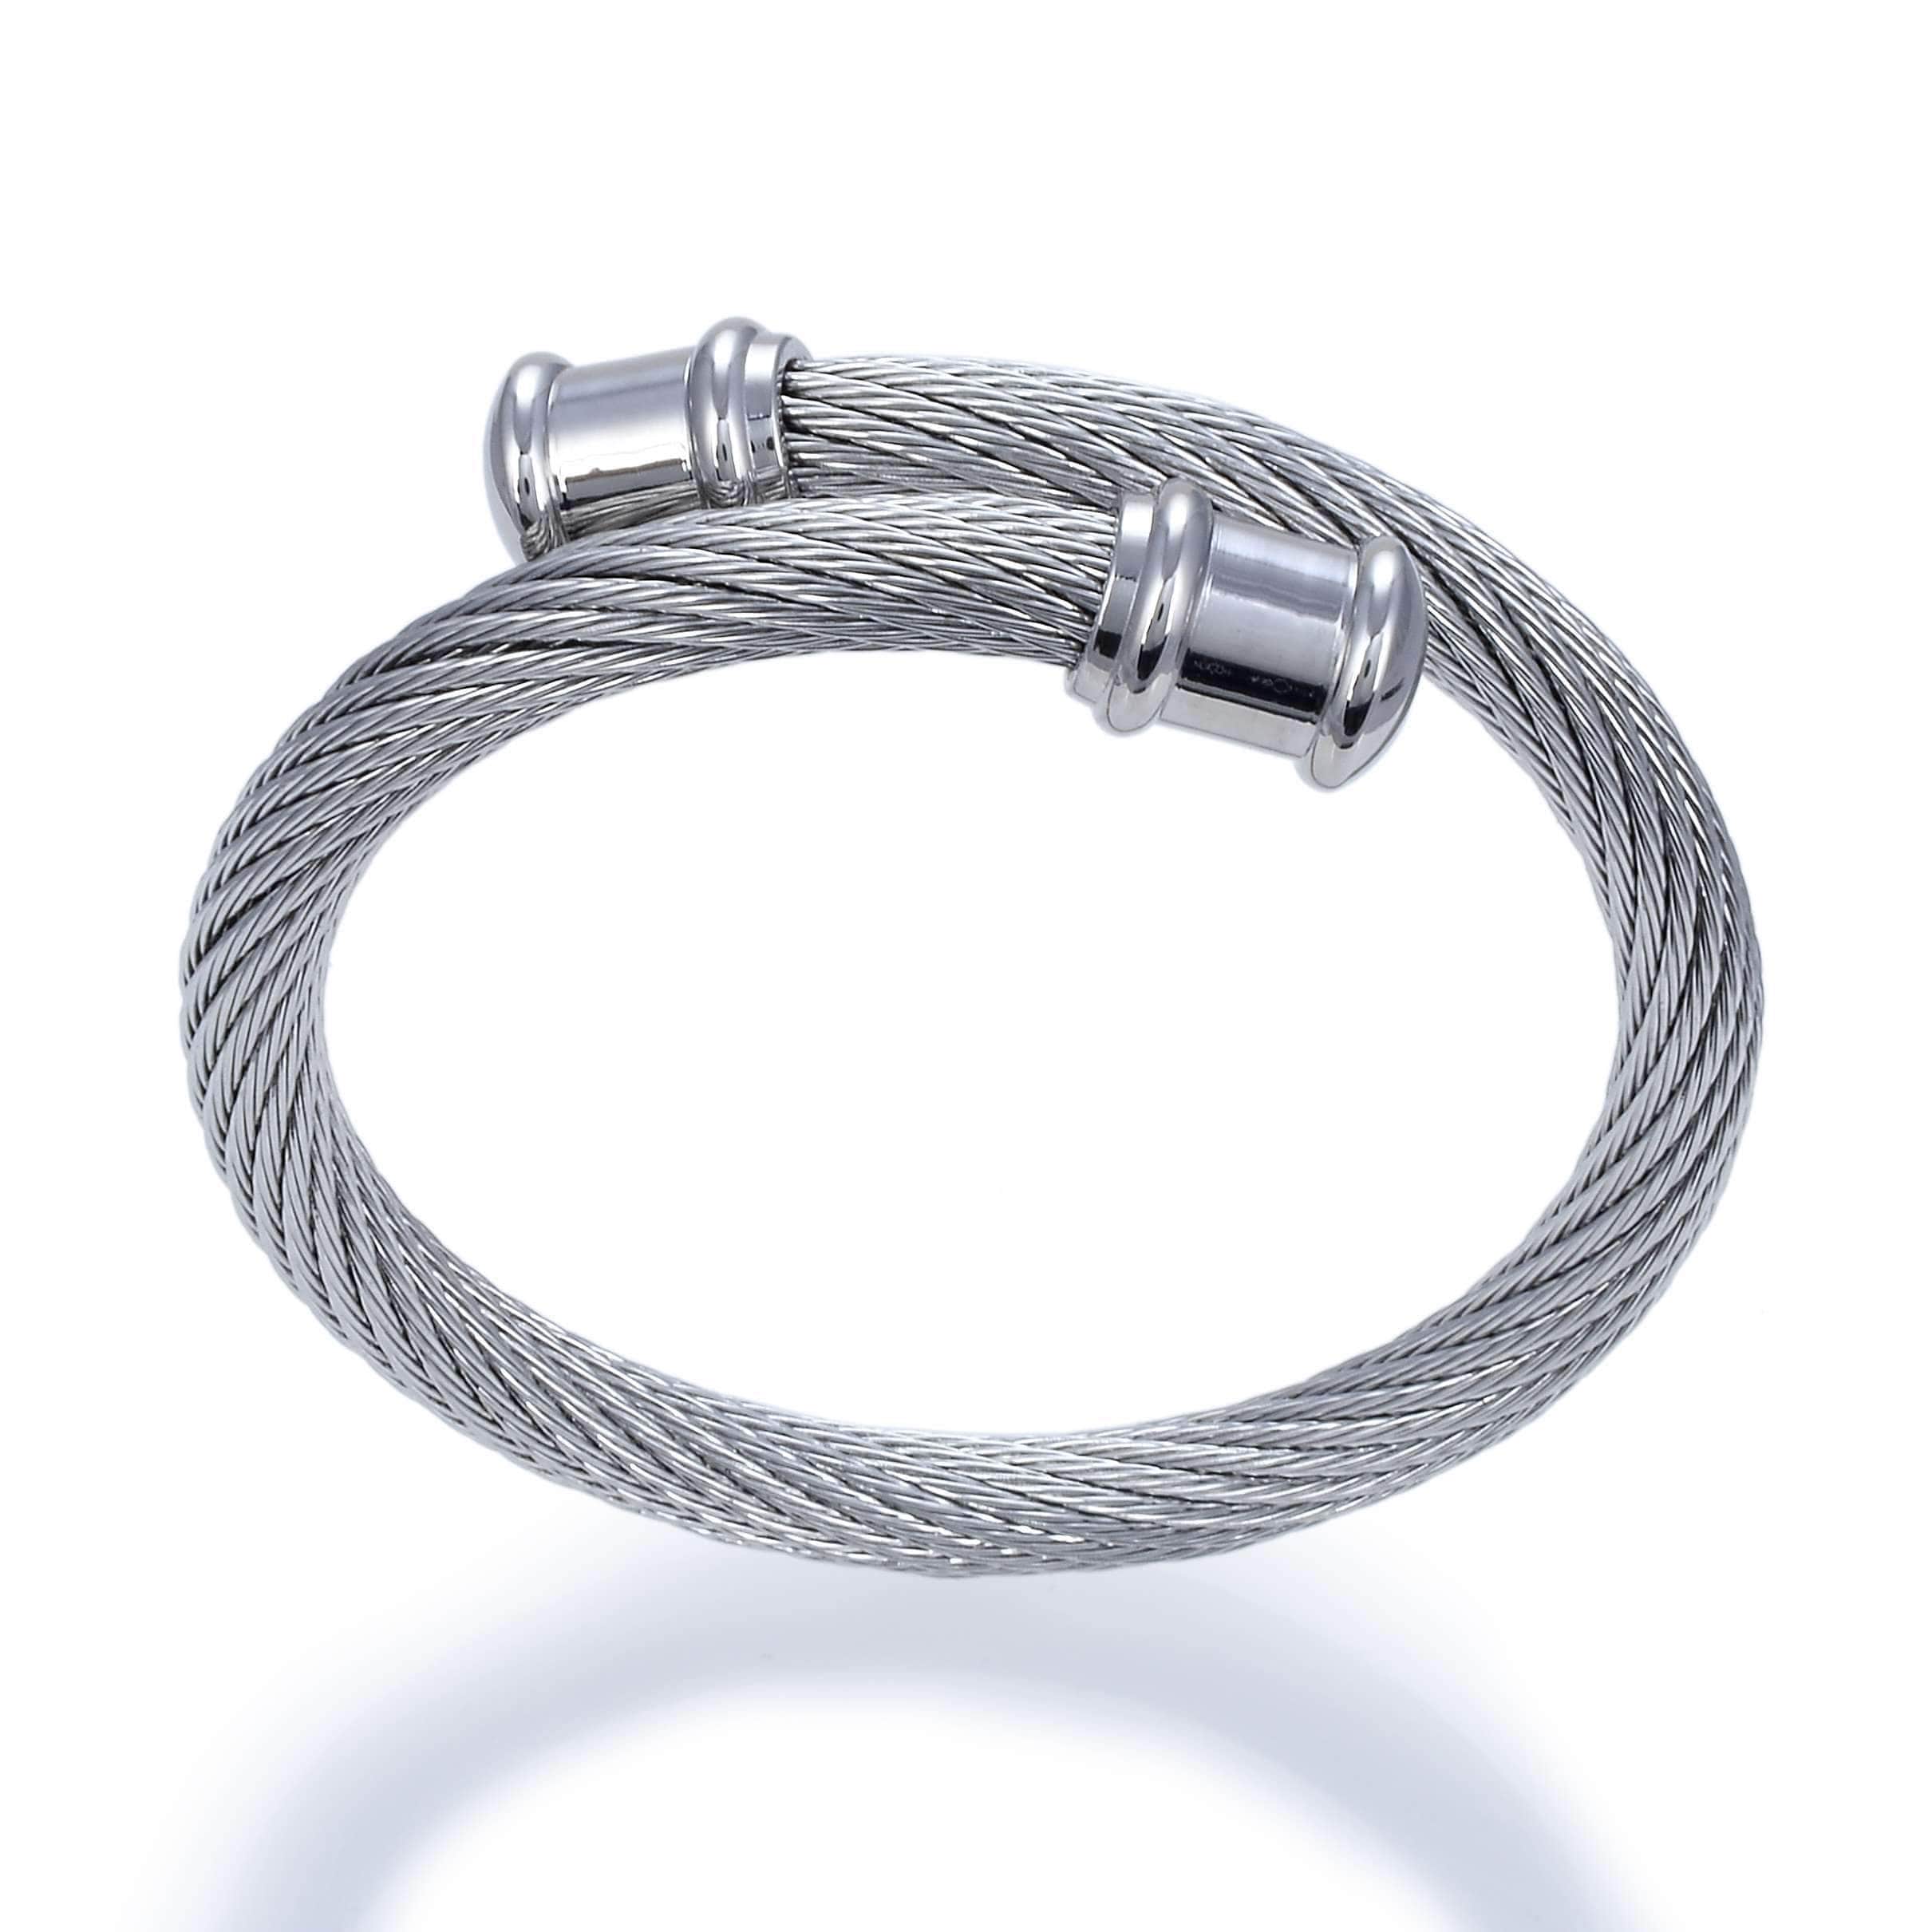 Kalifano Steel Hearts Jewelry Steel Hearts Rope Chain Round Tip Open Bangle Bracelet SHB200-48